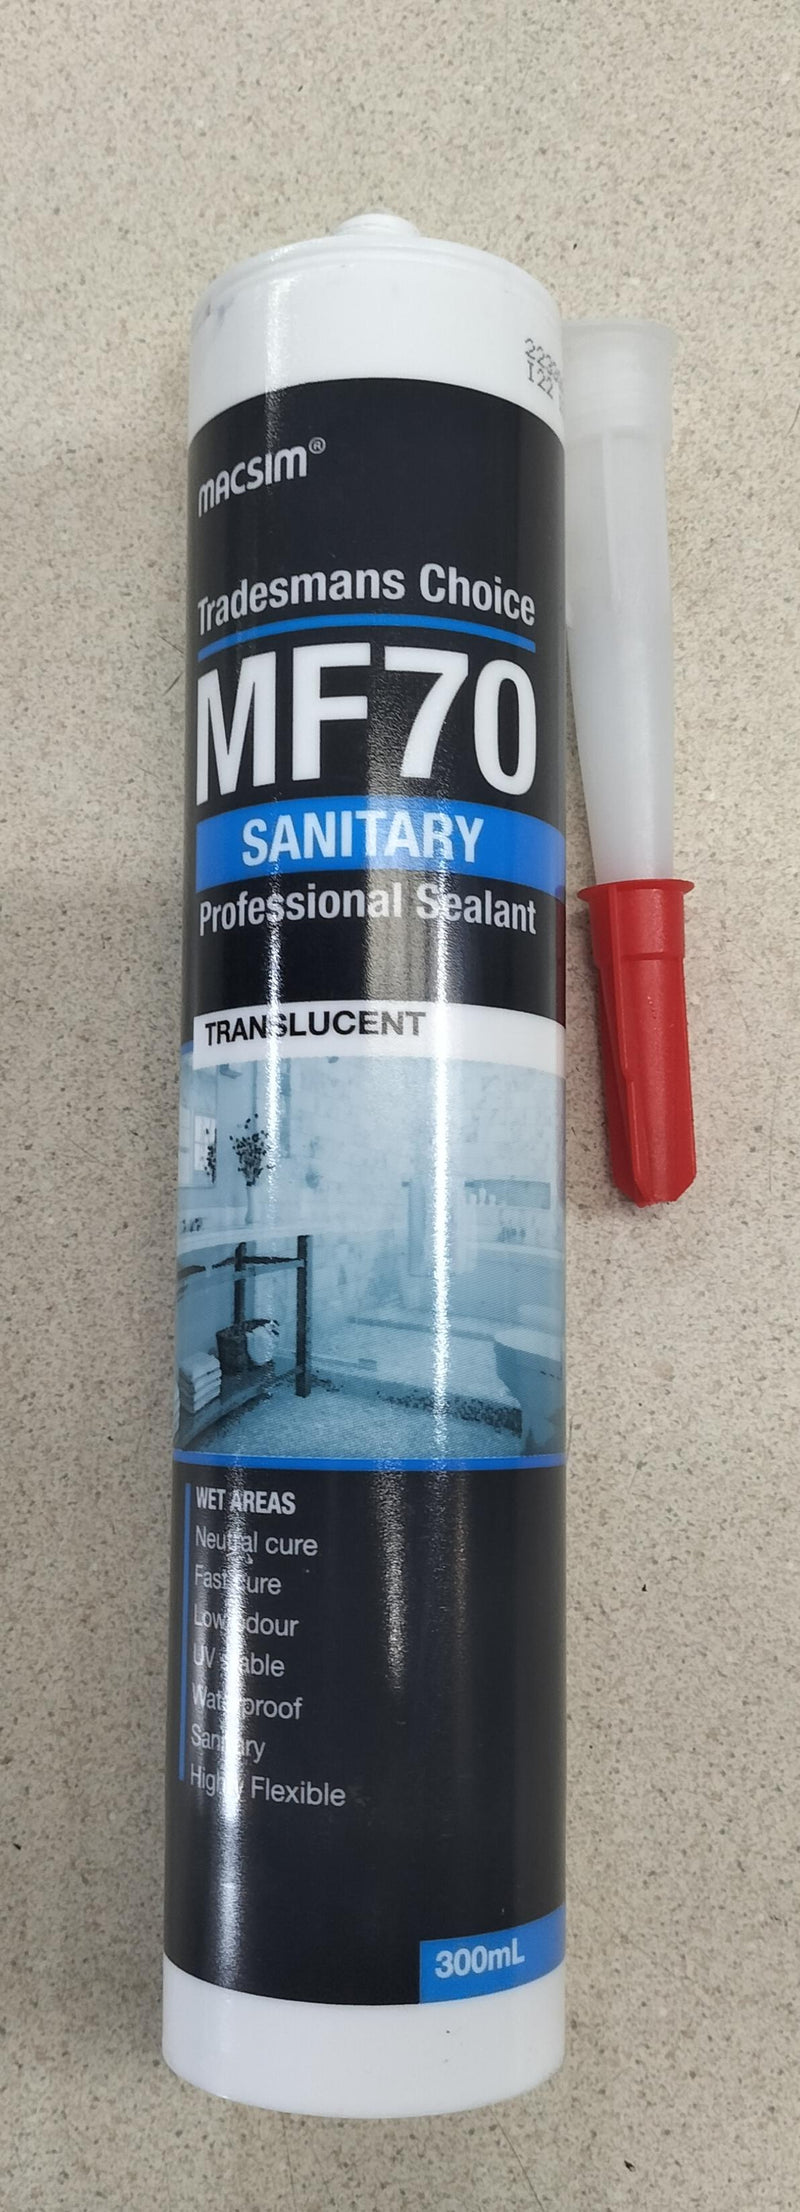 Macsim MF70 Sanitary Professional Sealant 300ml -Translucent